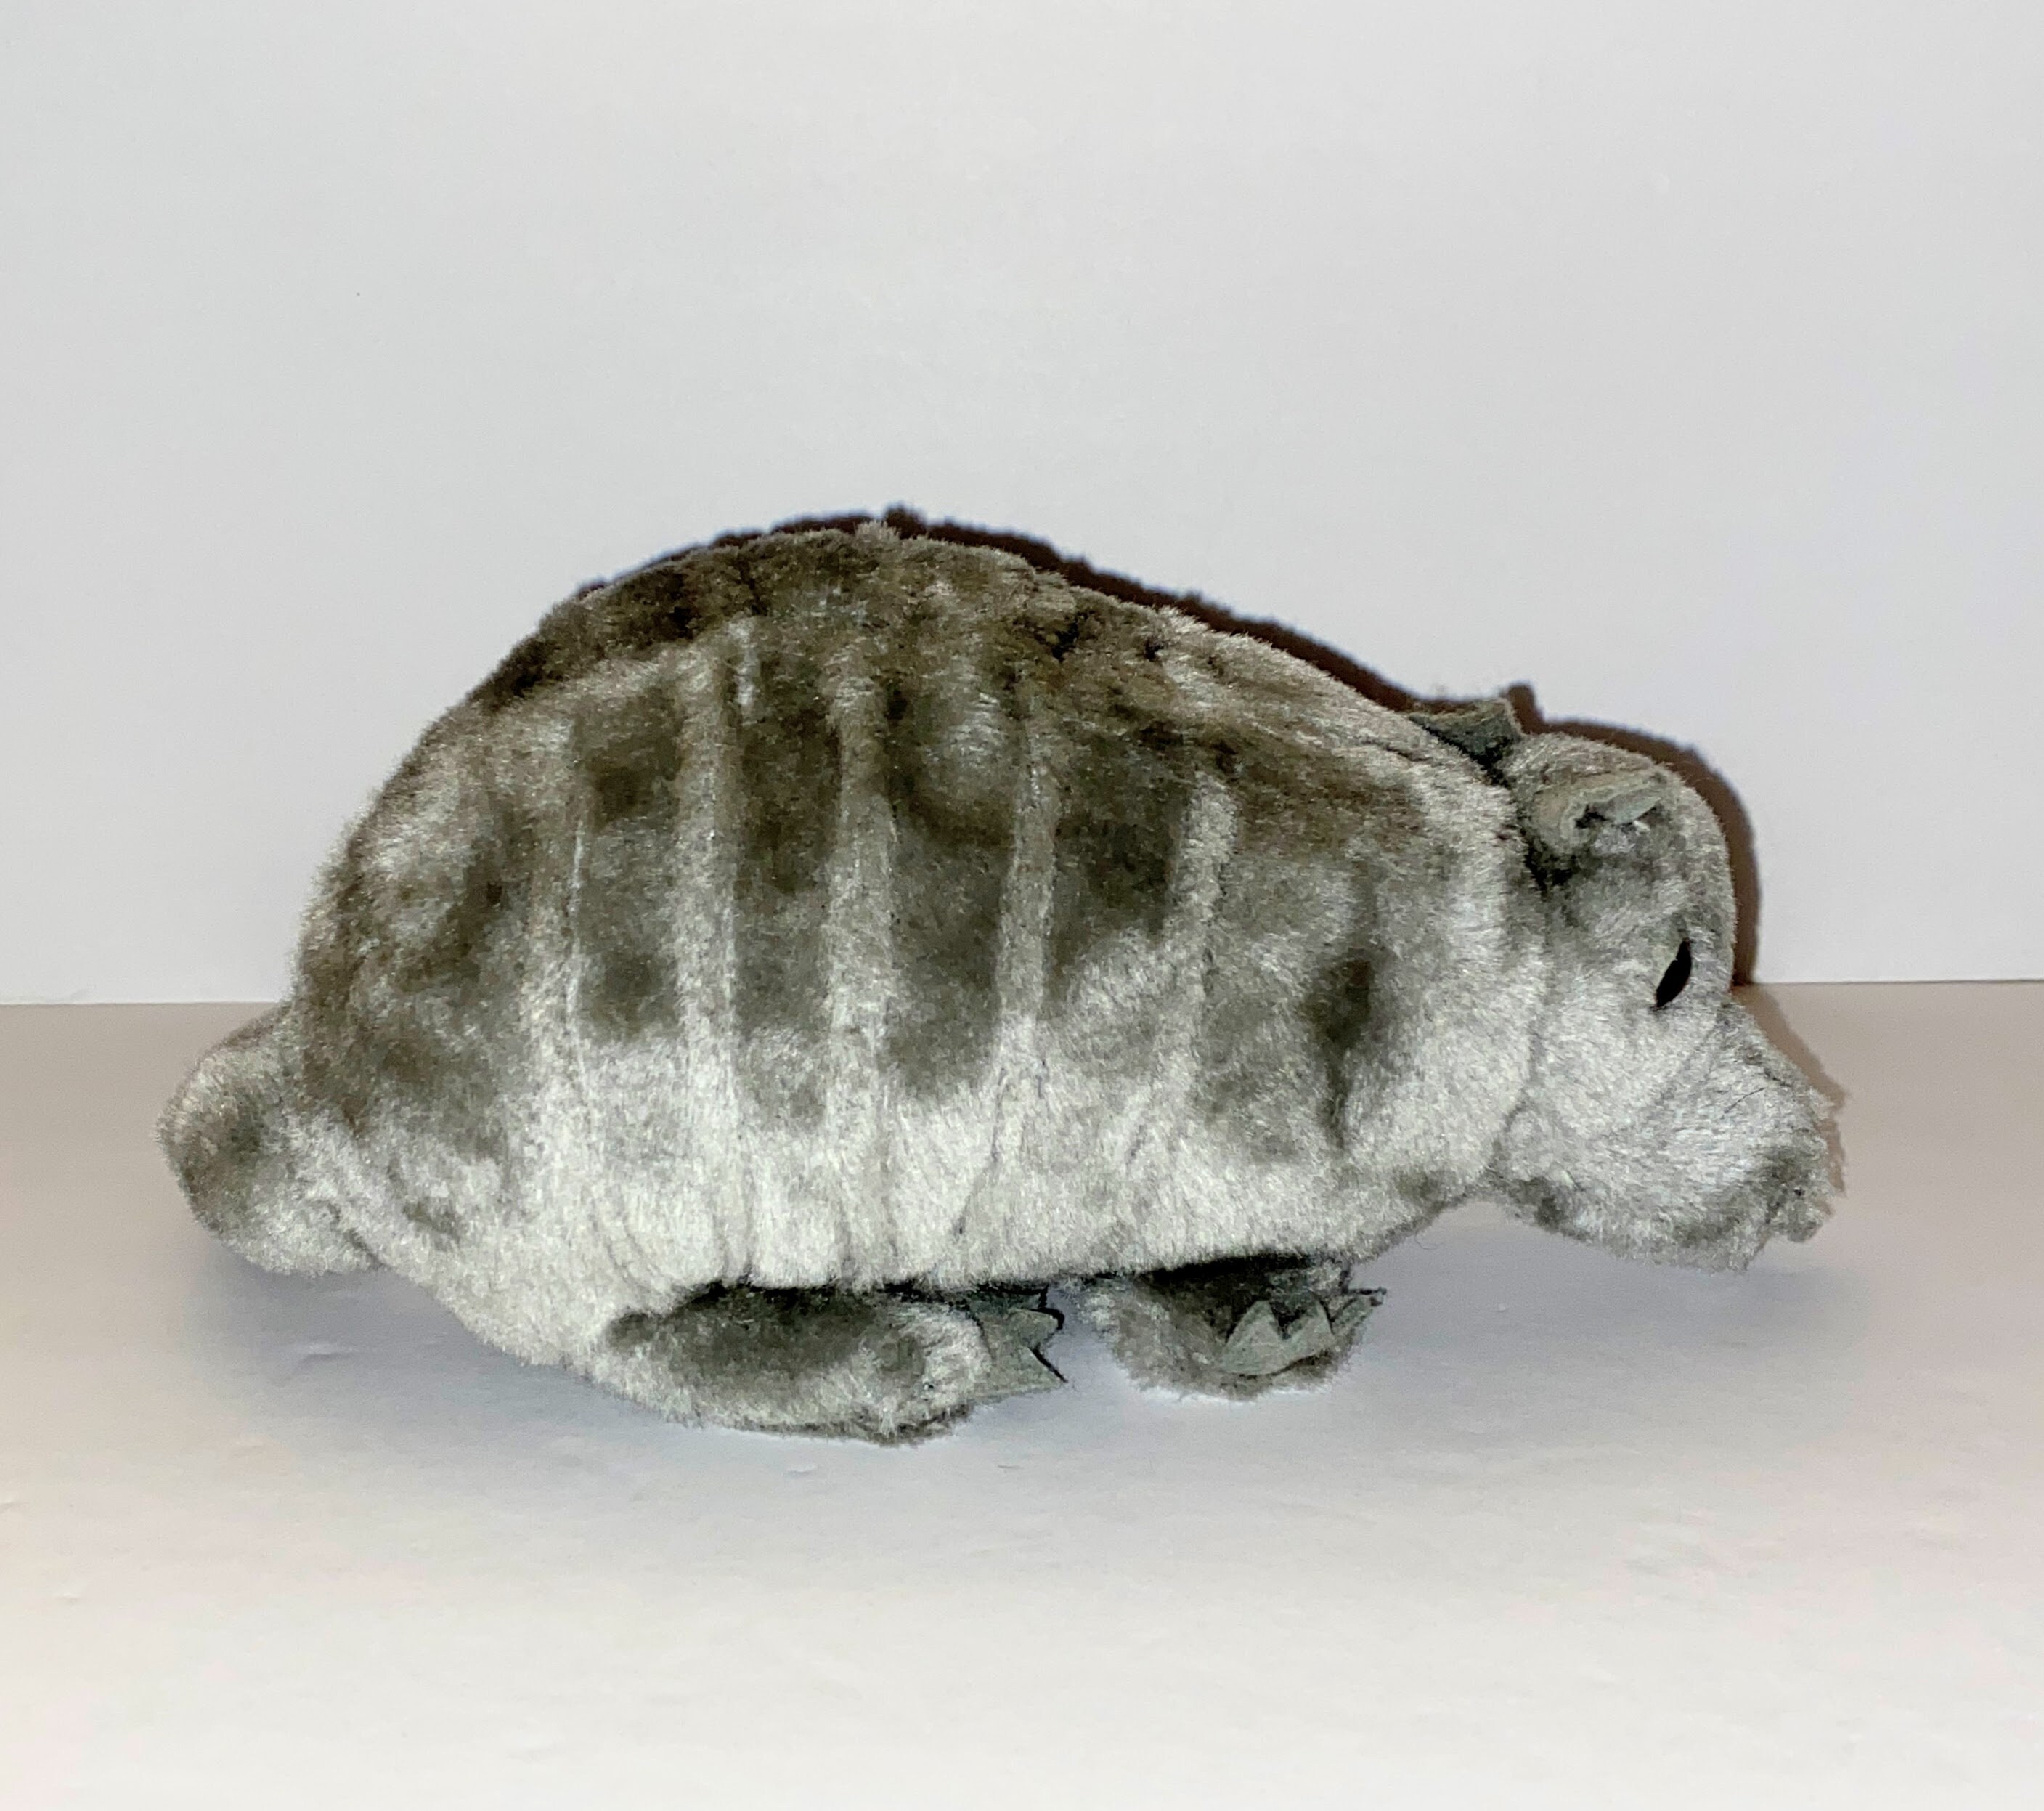 Emotional Support Armadillo Plush Stuffed Animal Personalized Gift